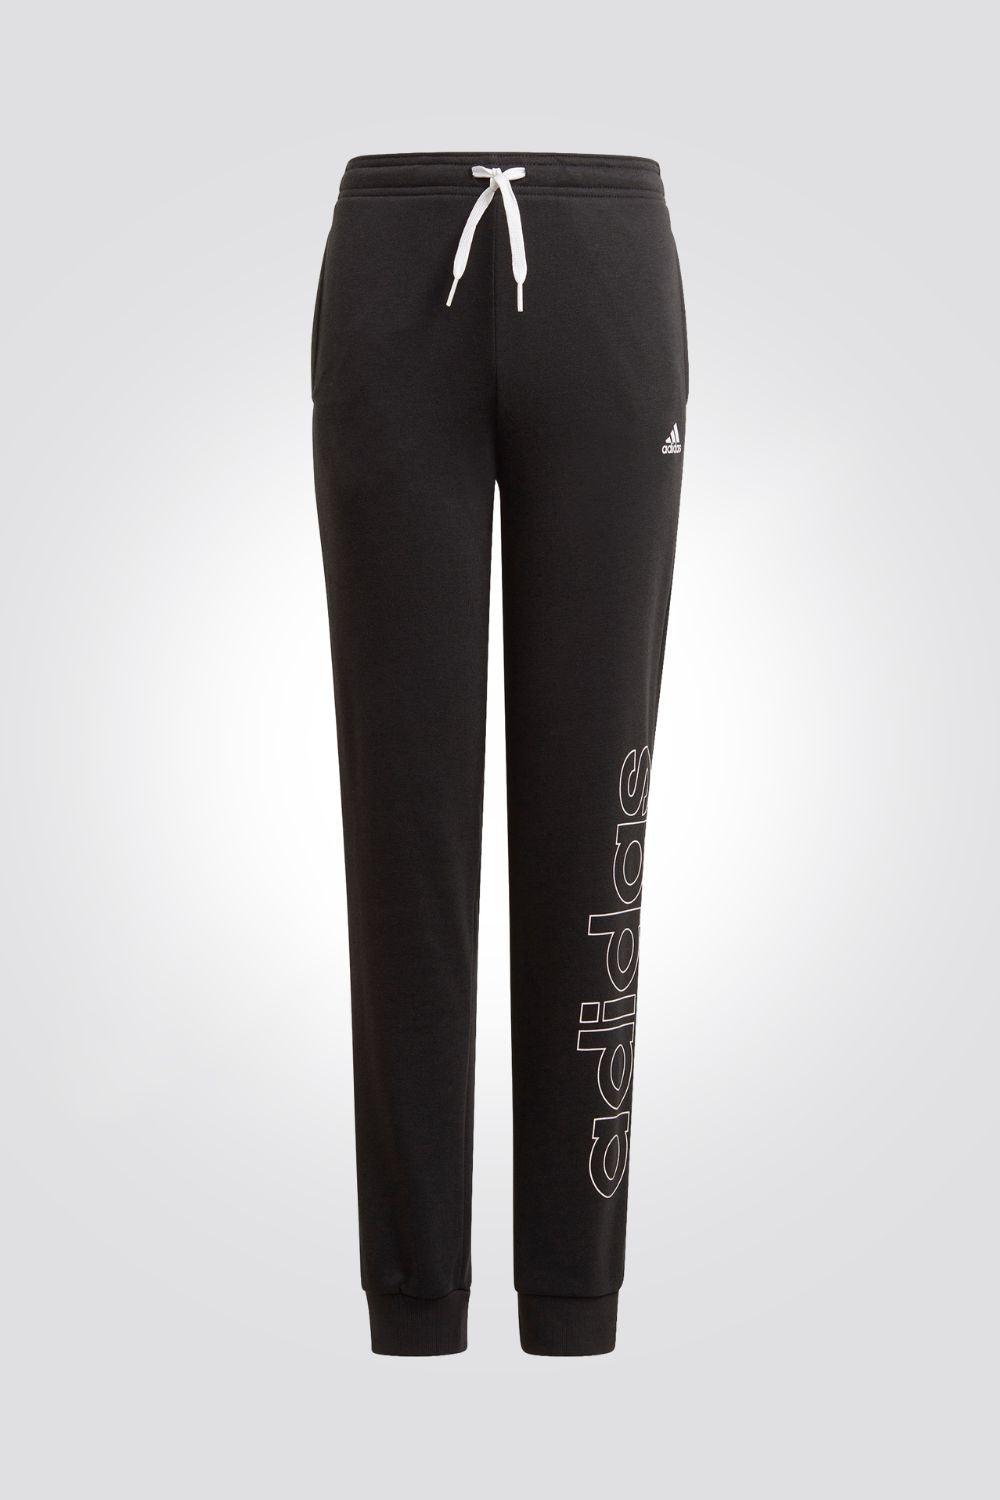 ADIDAS - מכנסיים ארוכים ESSENTIALS בצבע שחור - MASHBIR//365